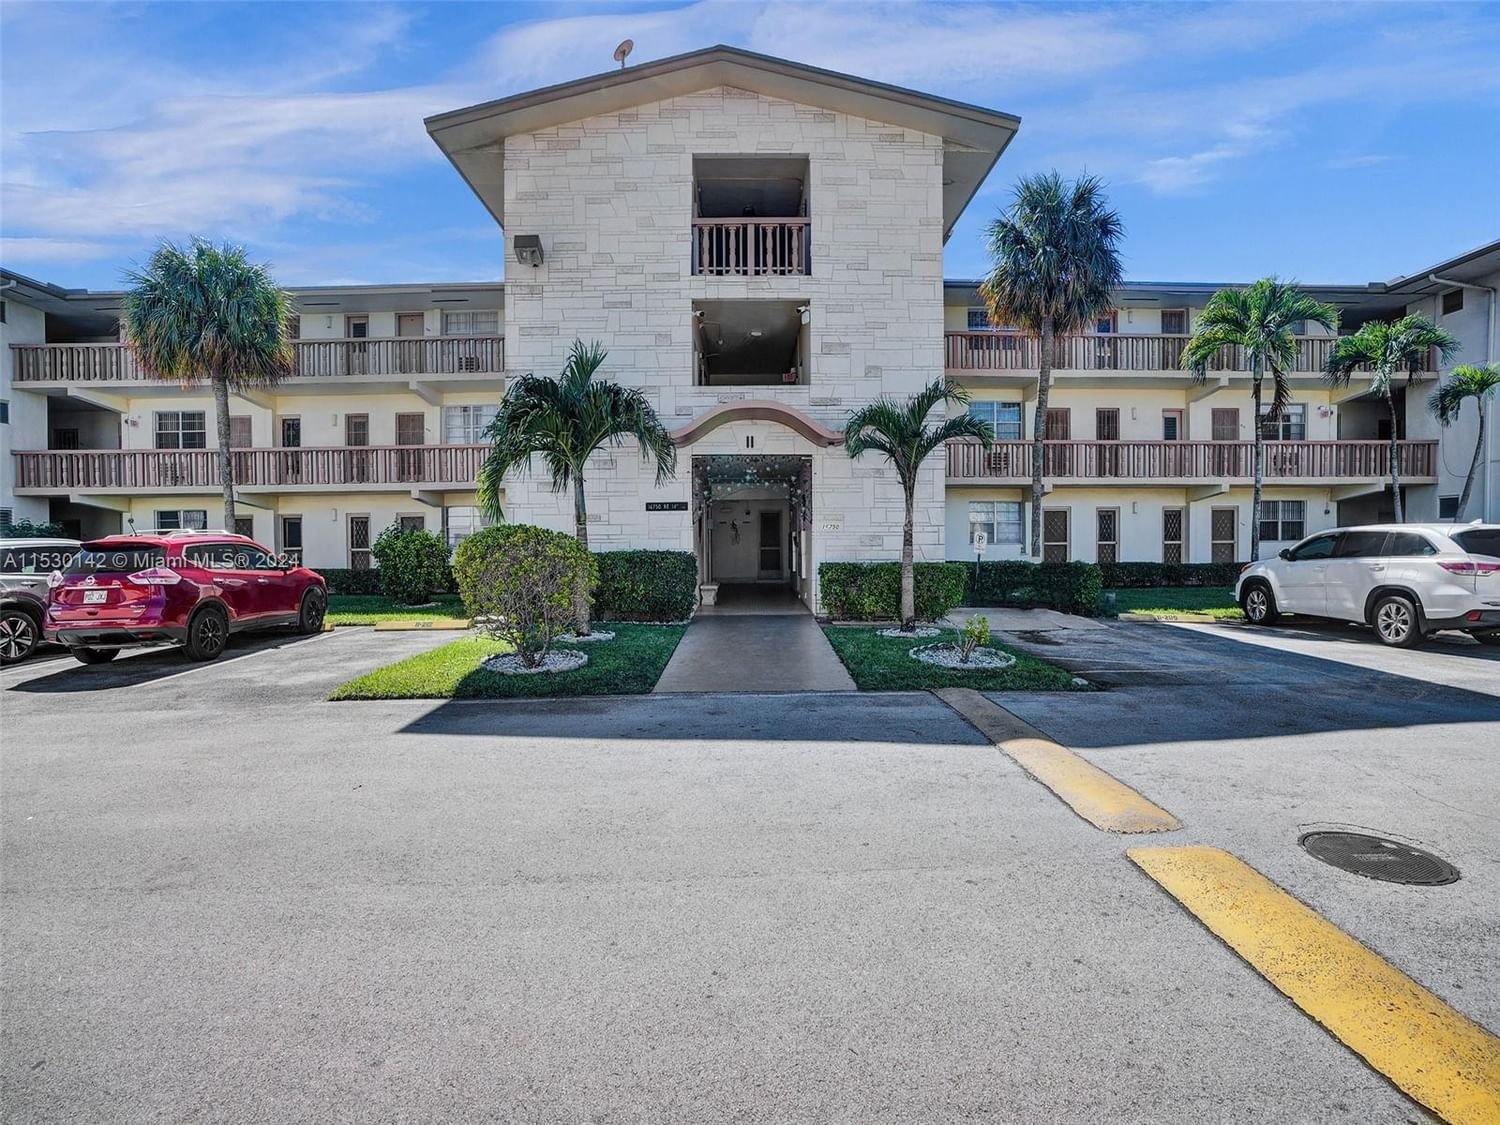 Real estate property located at 16750 14th Ave #310, Miami-Dade County, MAR-LEN GARDENS NO 11 COR, Miami, FL